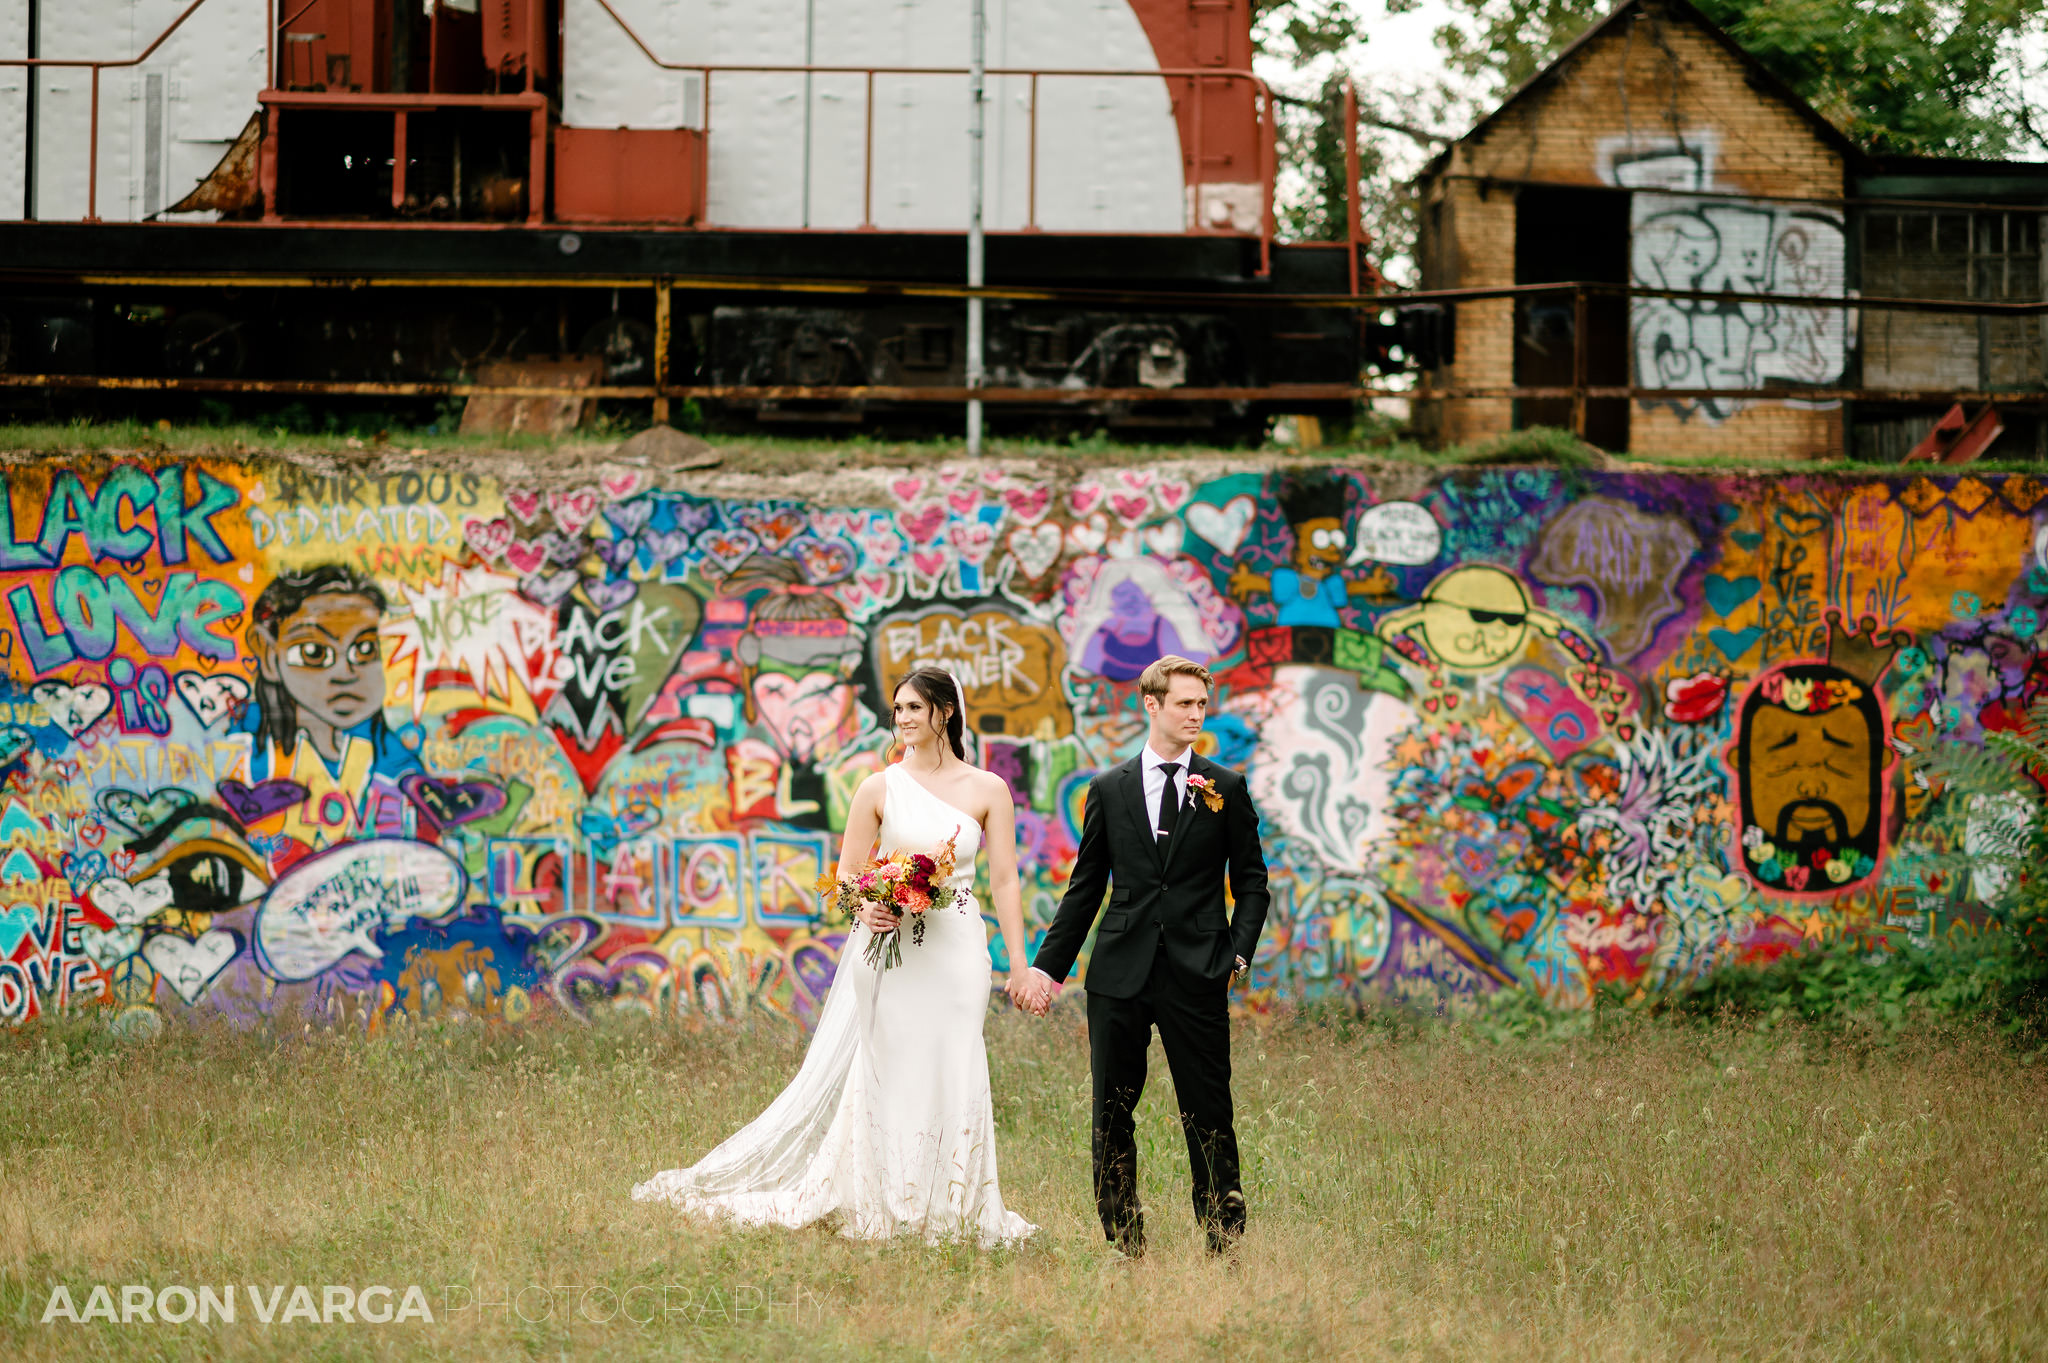 25 wedding photos carrie furnace rankin - Emily + Eli | Carrie Furnace Wedding Photos